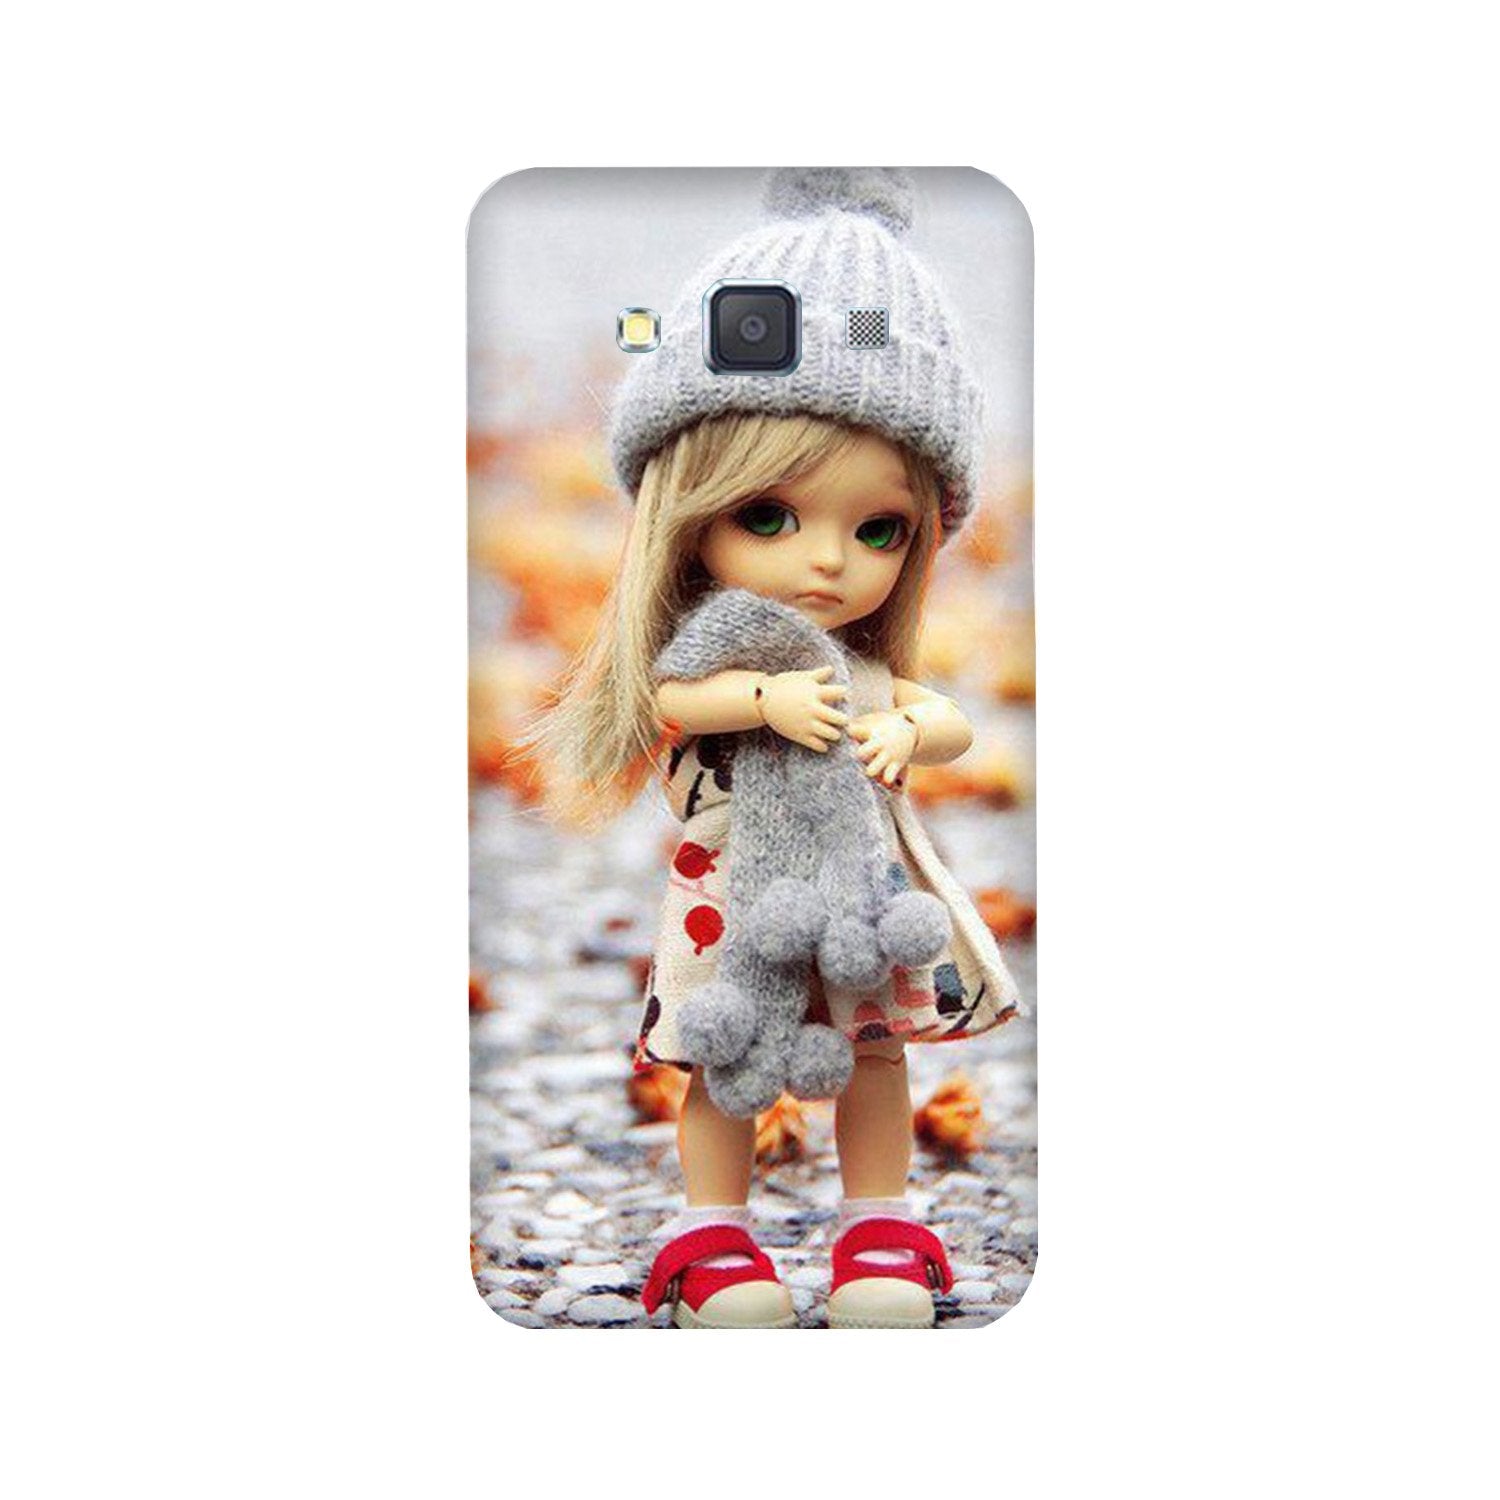 Cute Doll Case for Galaxy Grand 2